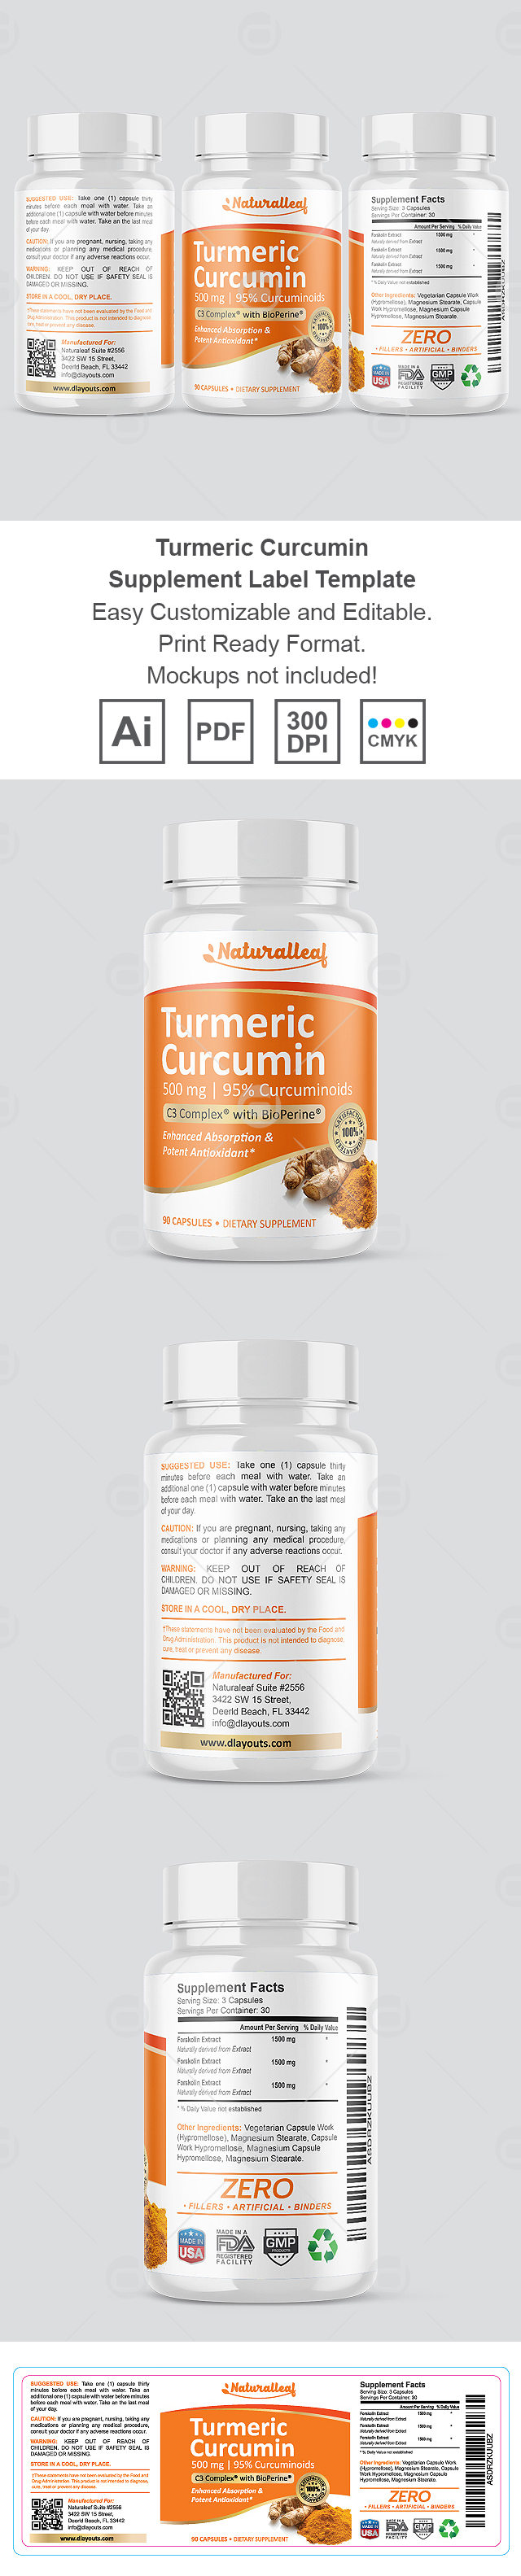 Turmeric Curcumin Supplement Label Template